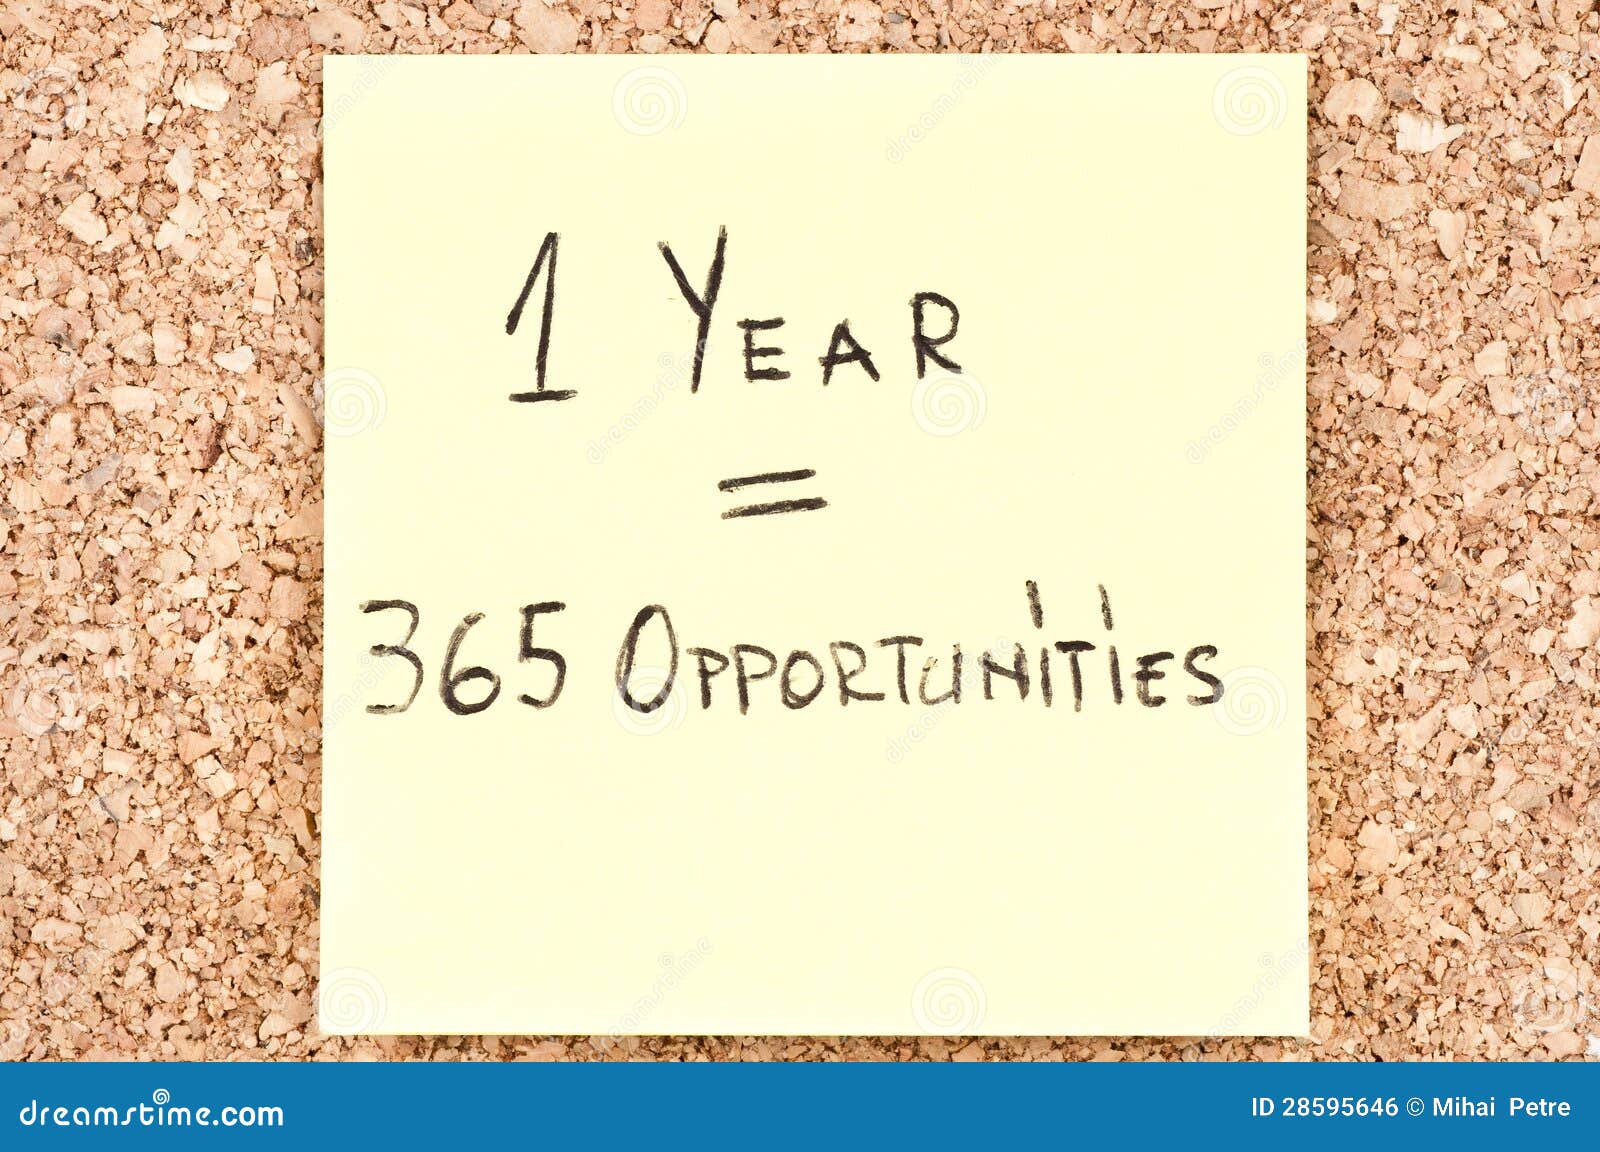 1 Year 365 Opportunities Stock Photo Megapixl